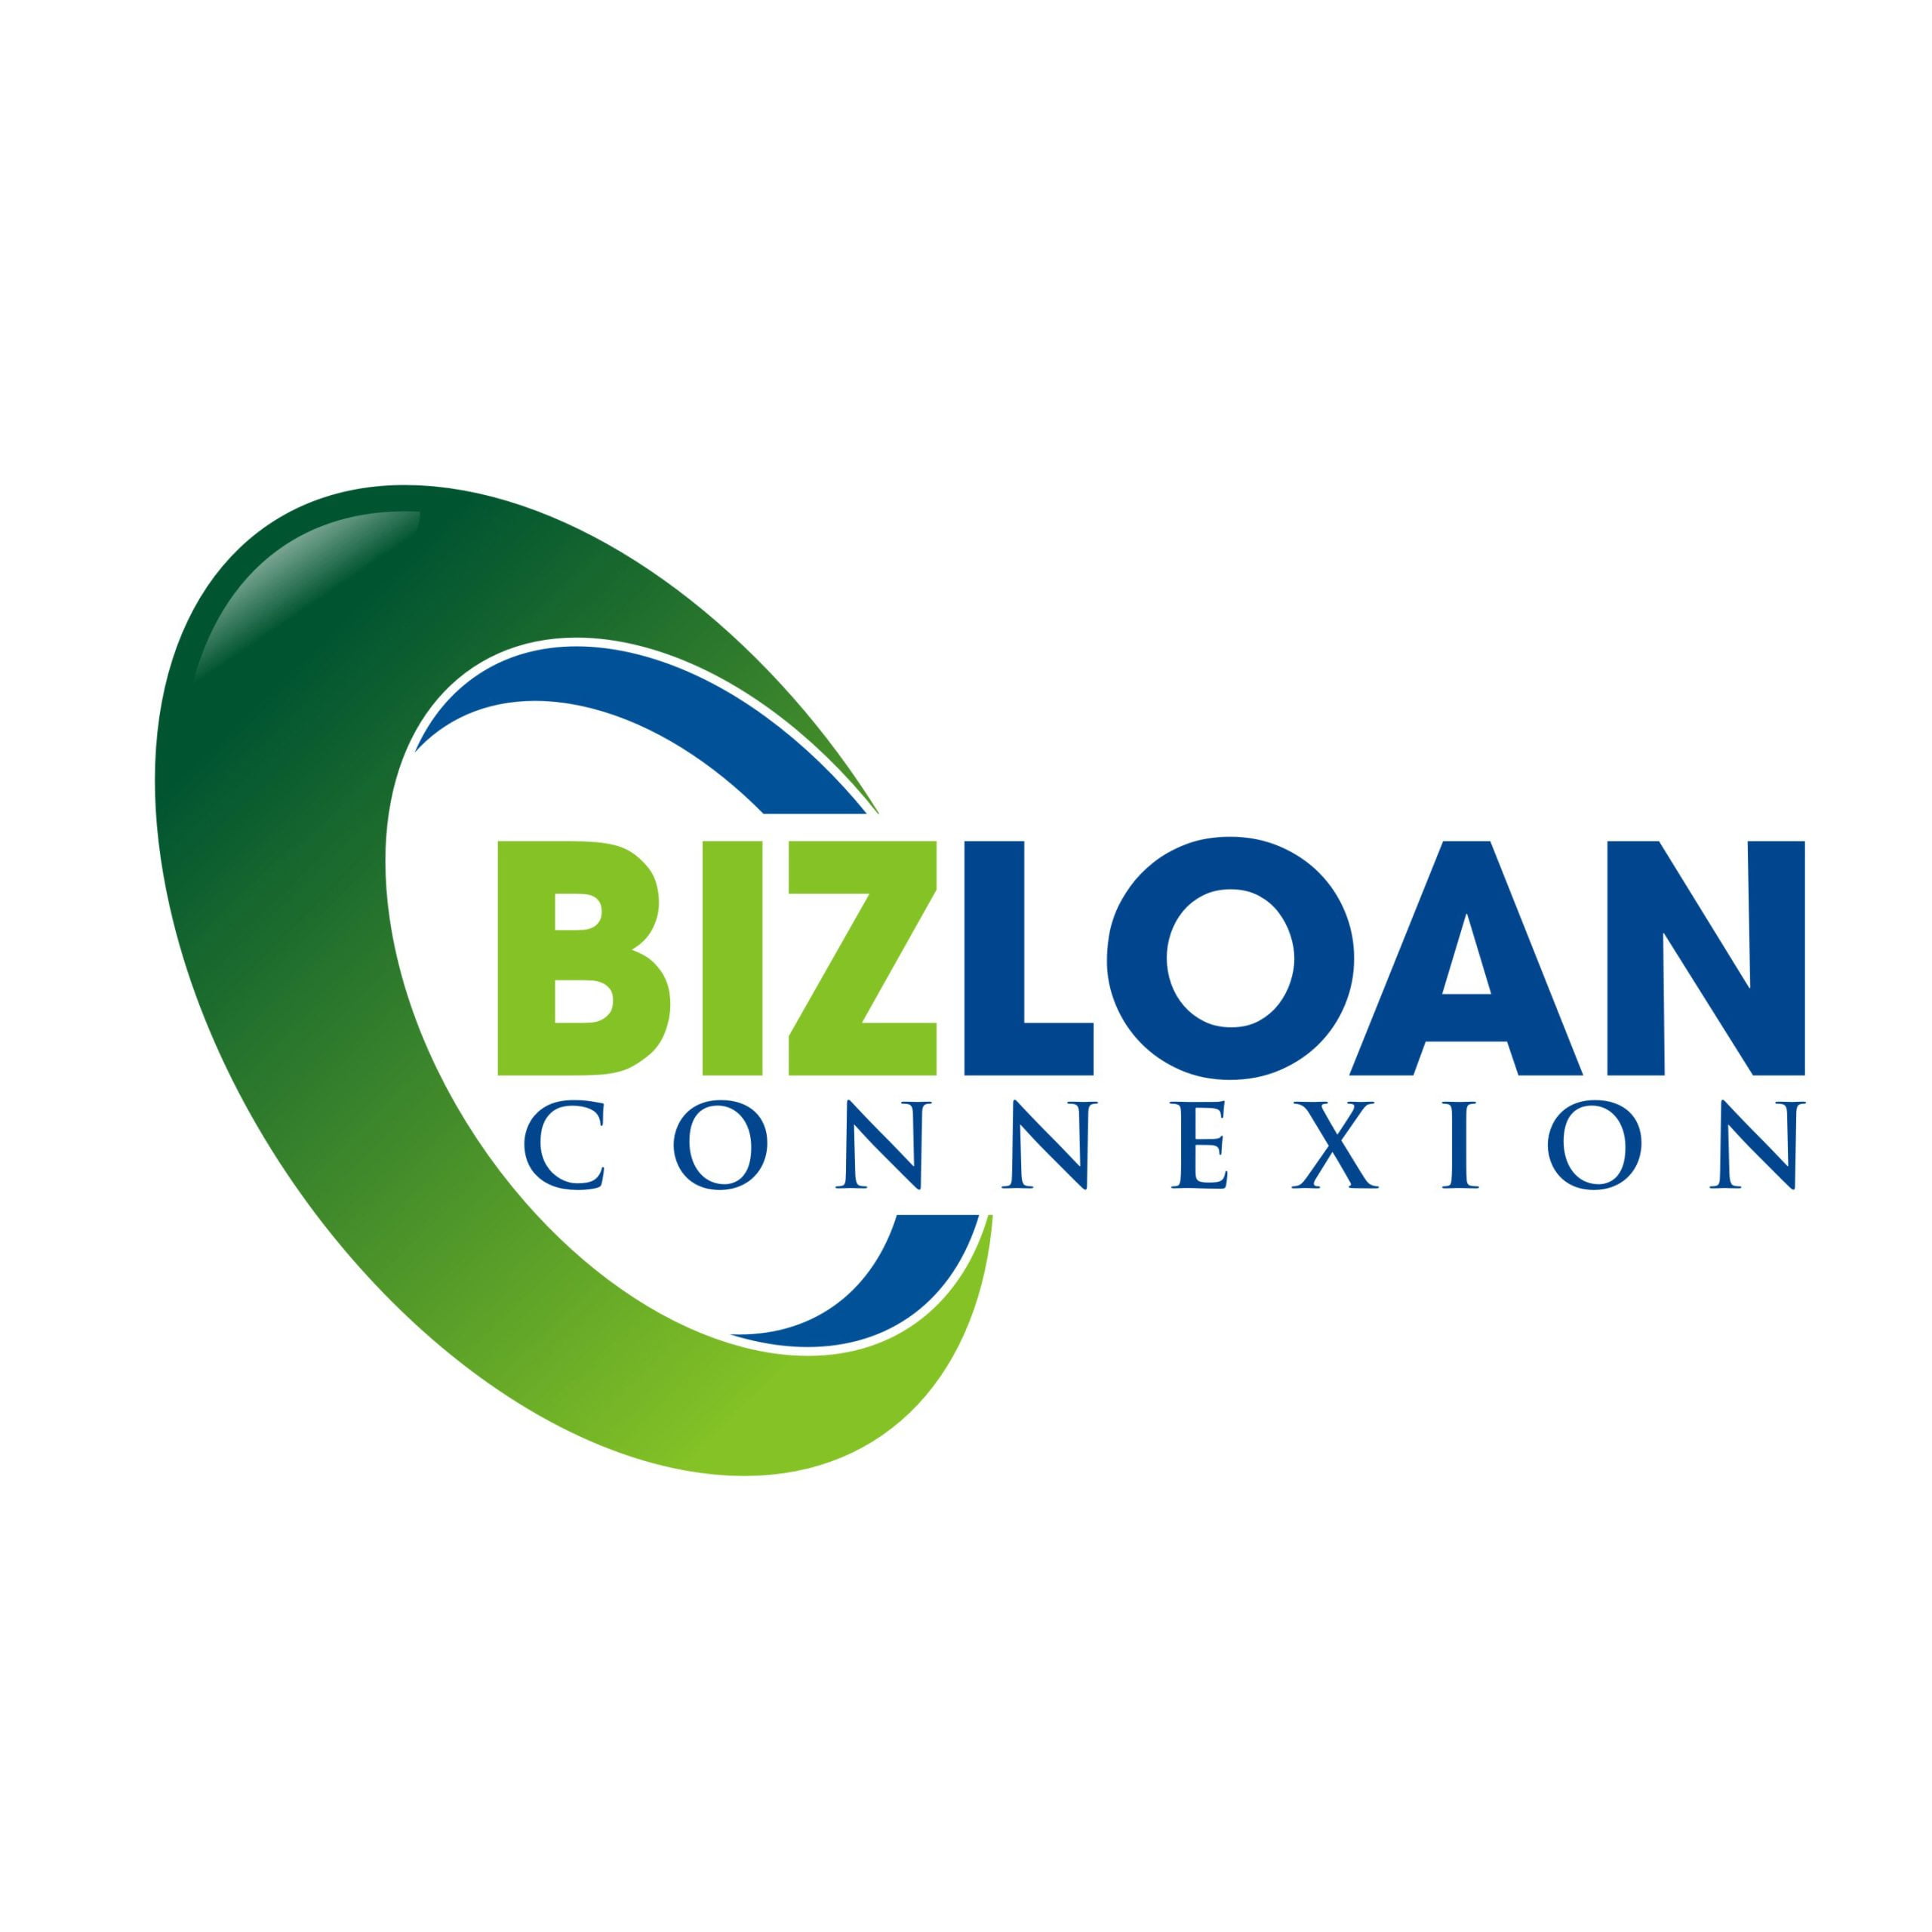 Biz Loan ConnexionCMYK CONVERT